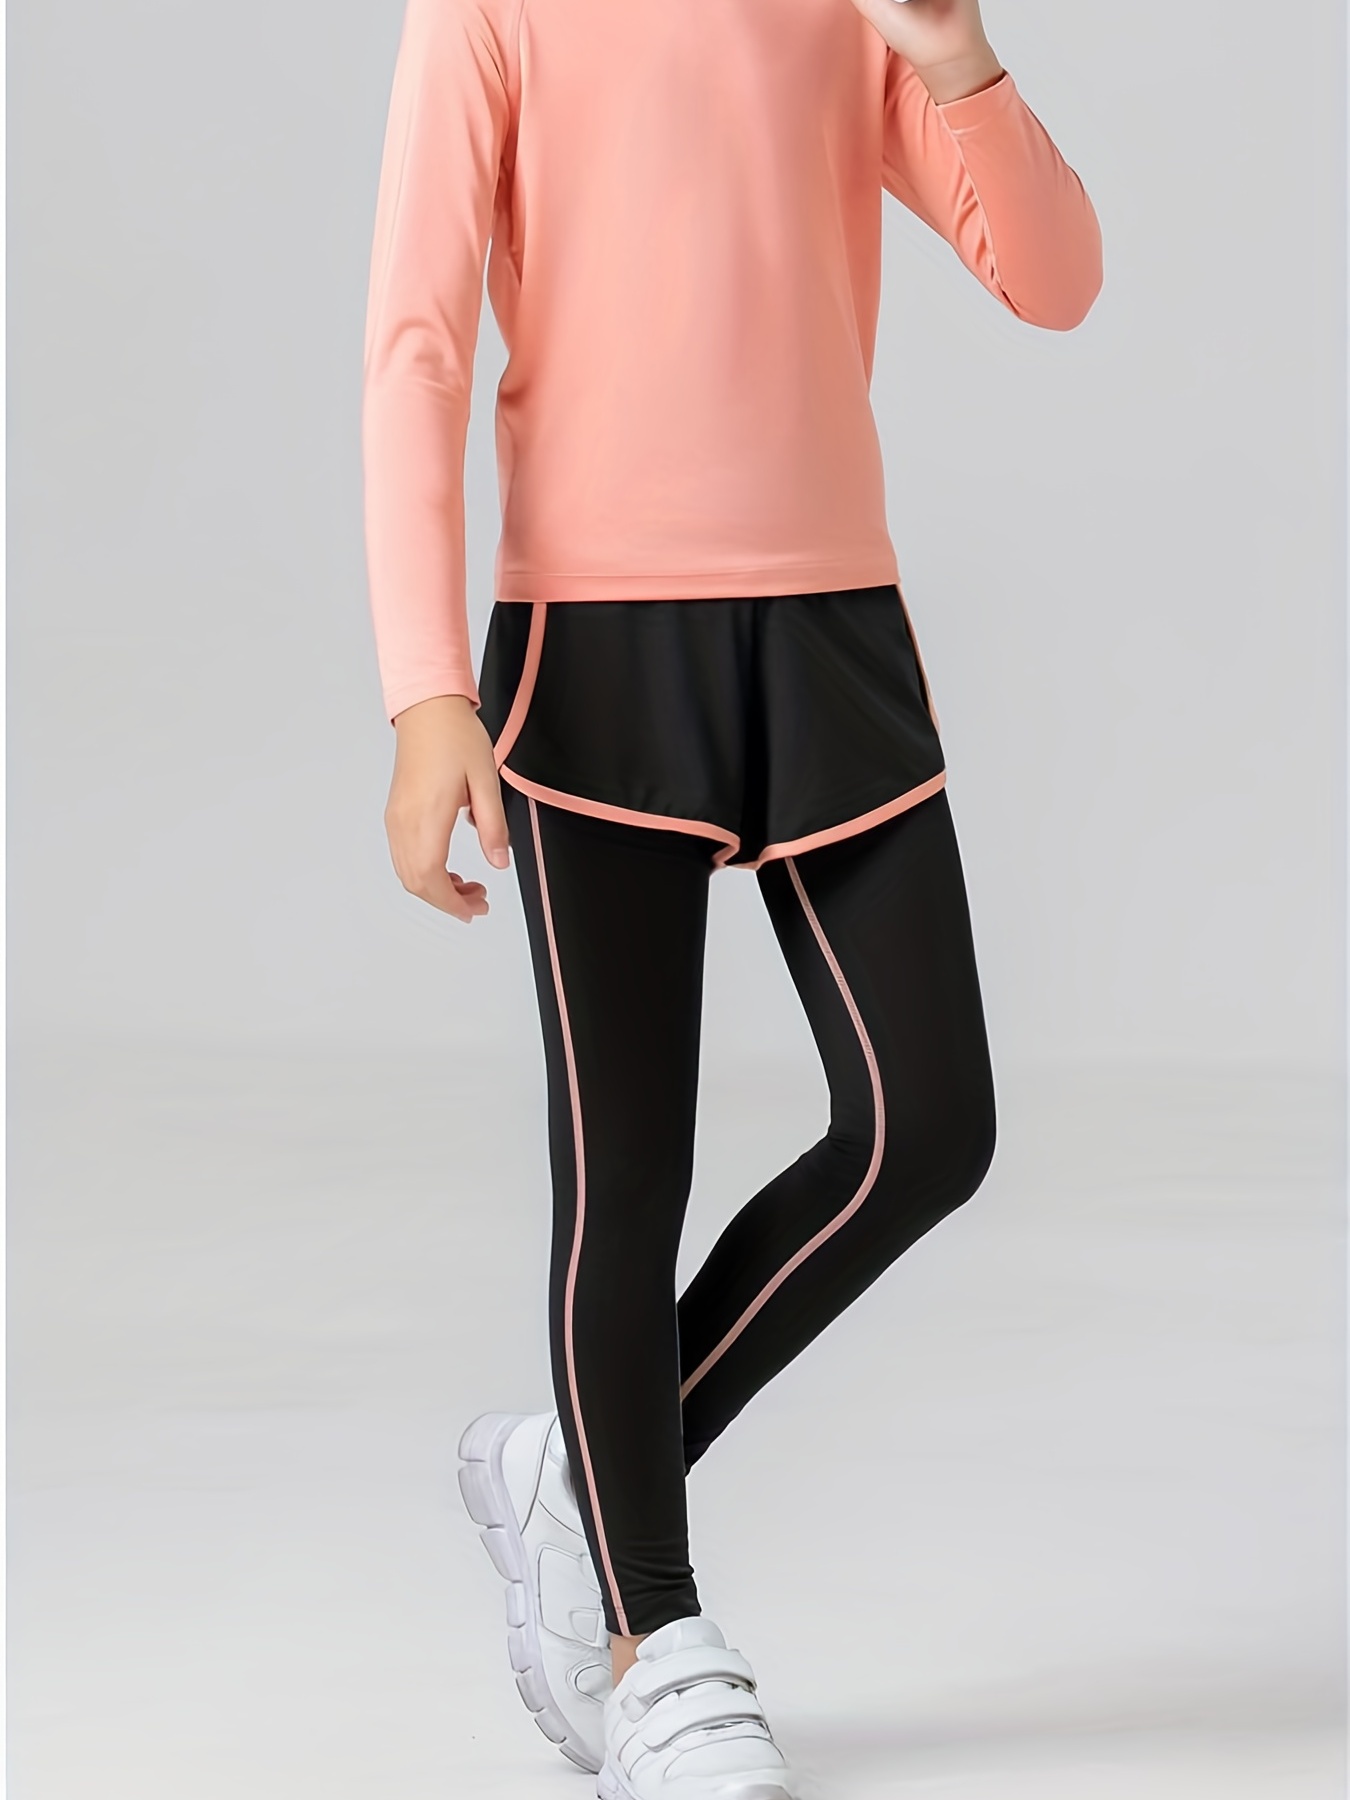 Girls Sport Shorts Australia - Activewear & Sportswear for